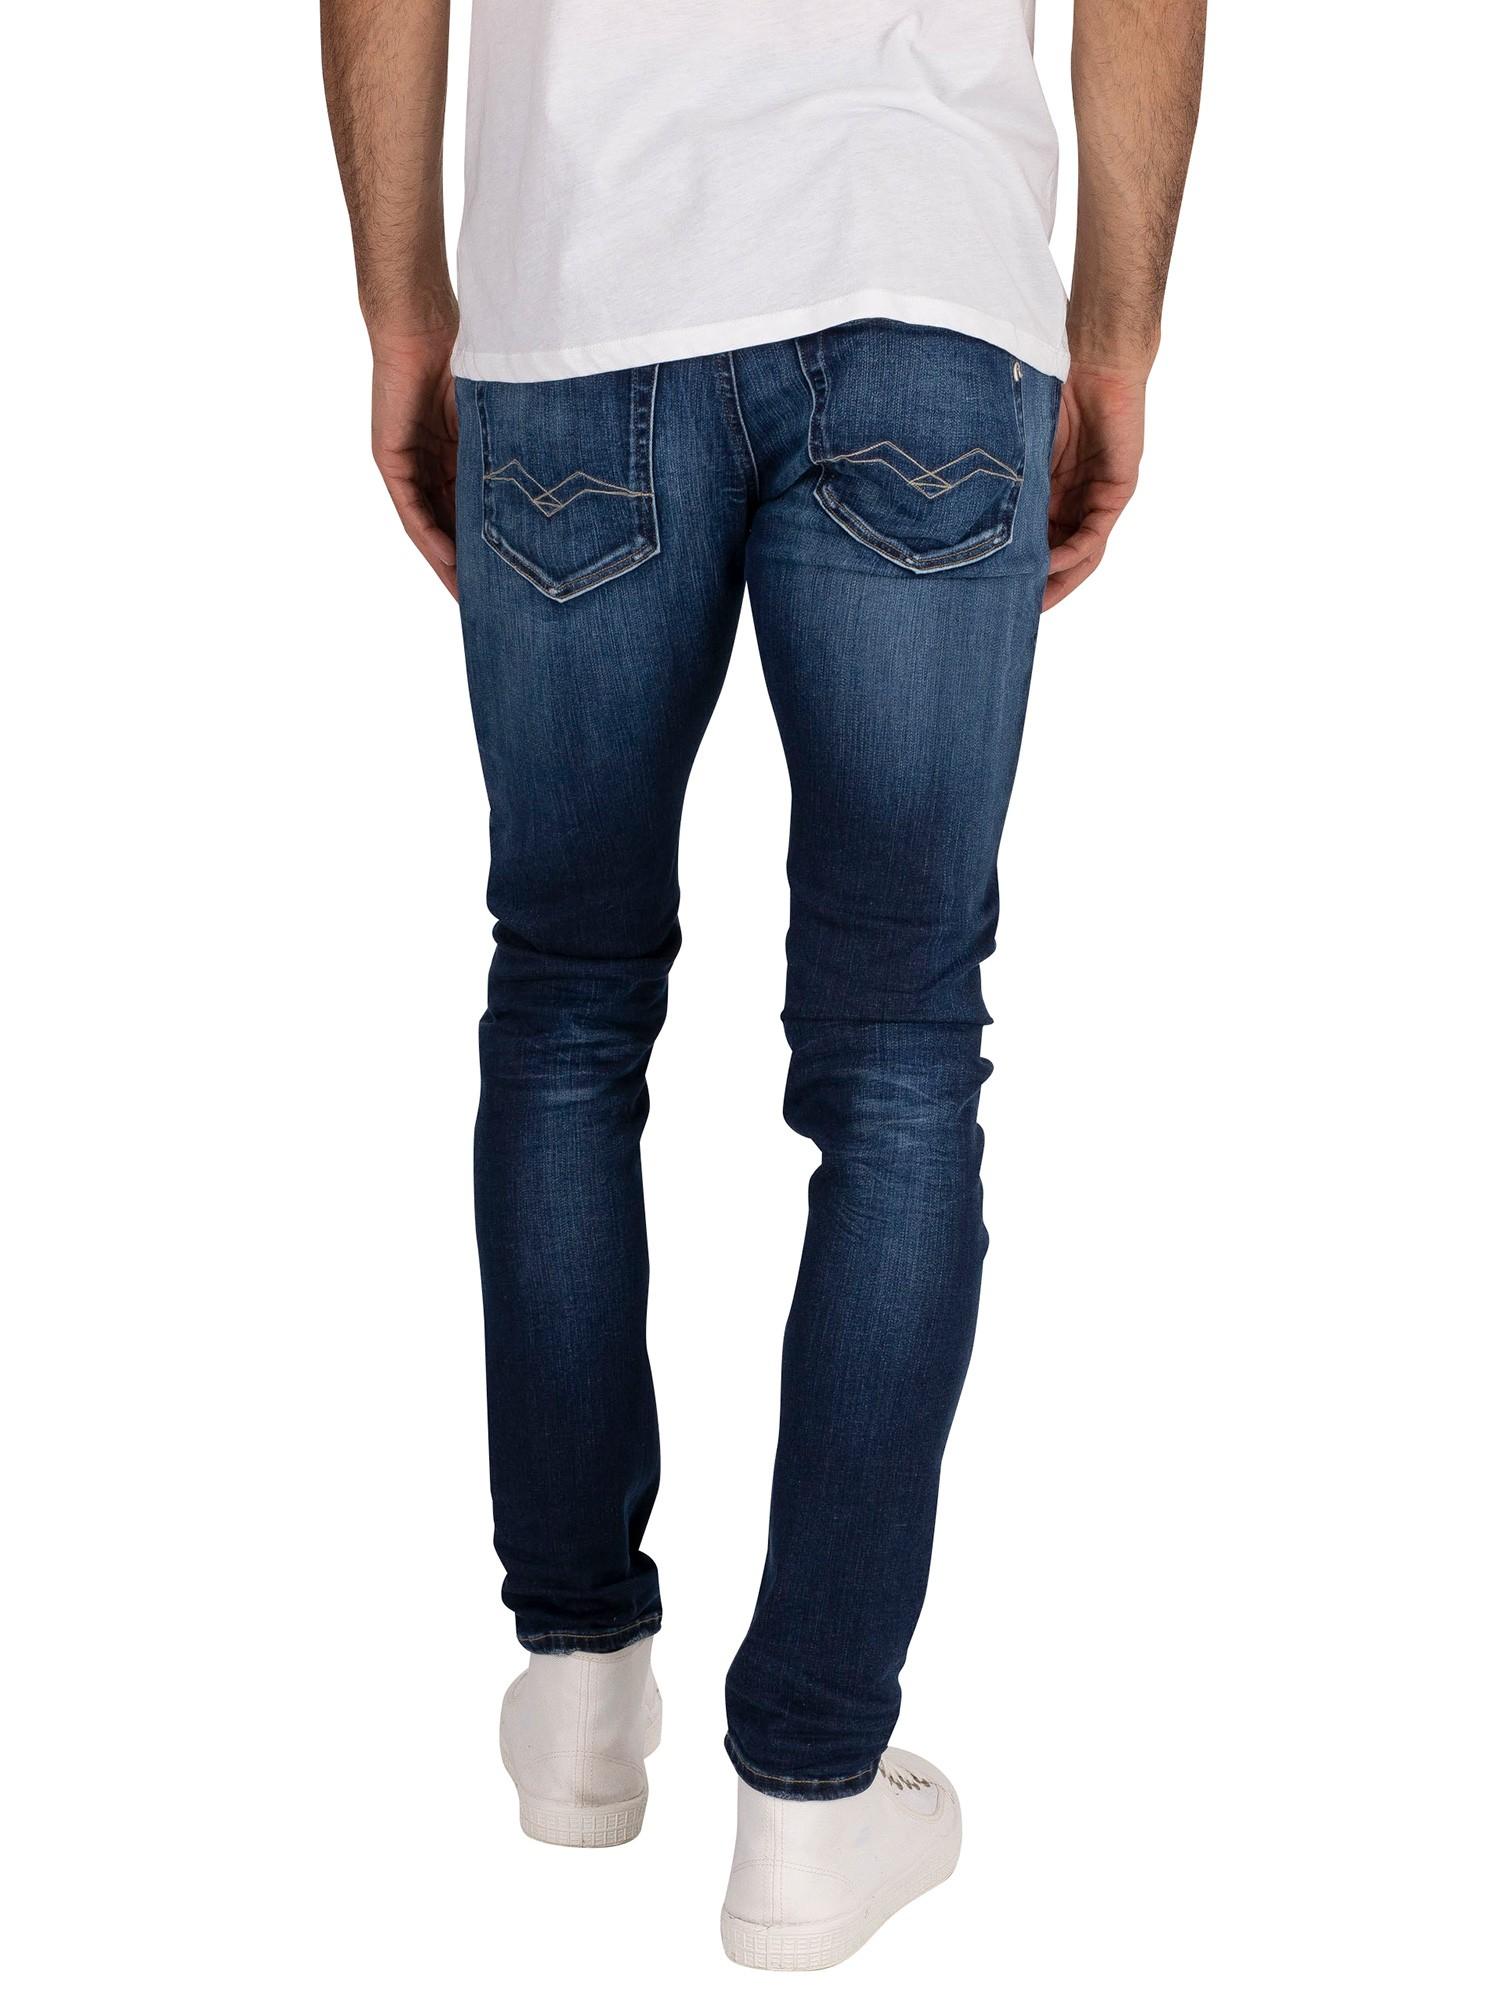 Replay Denim Jondrill Hyperflex Jeans in Blue for Men - Lyst